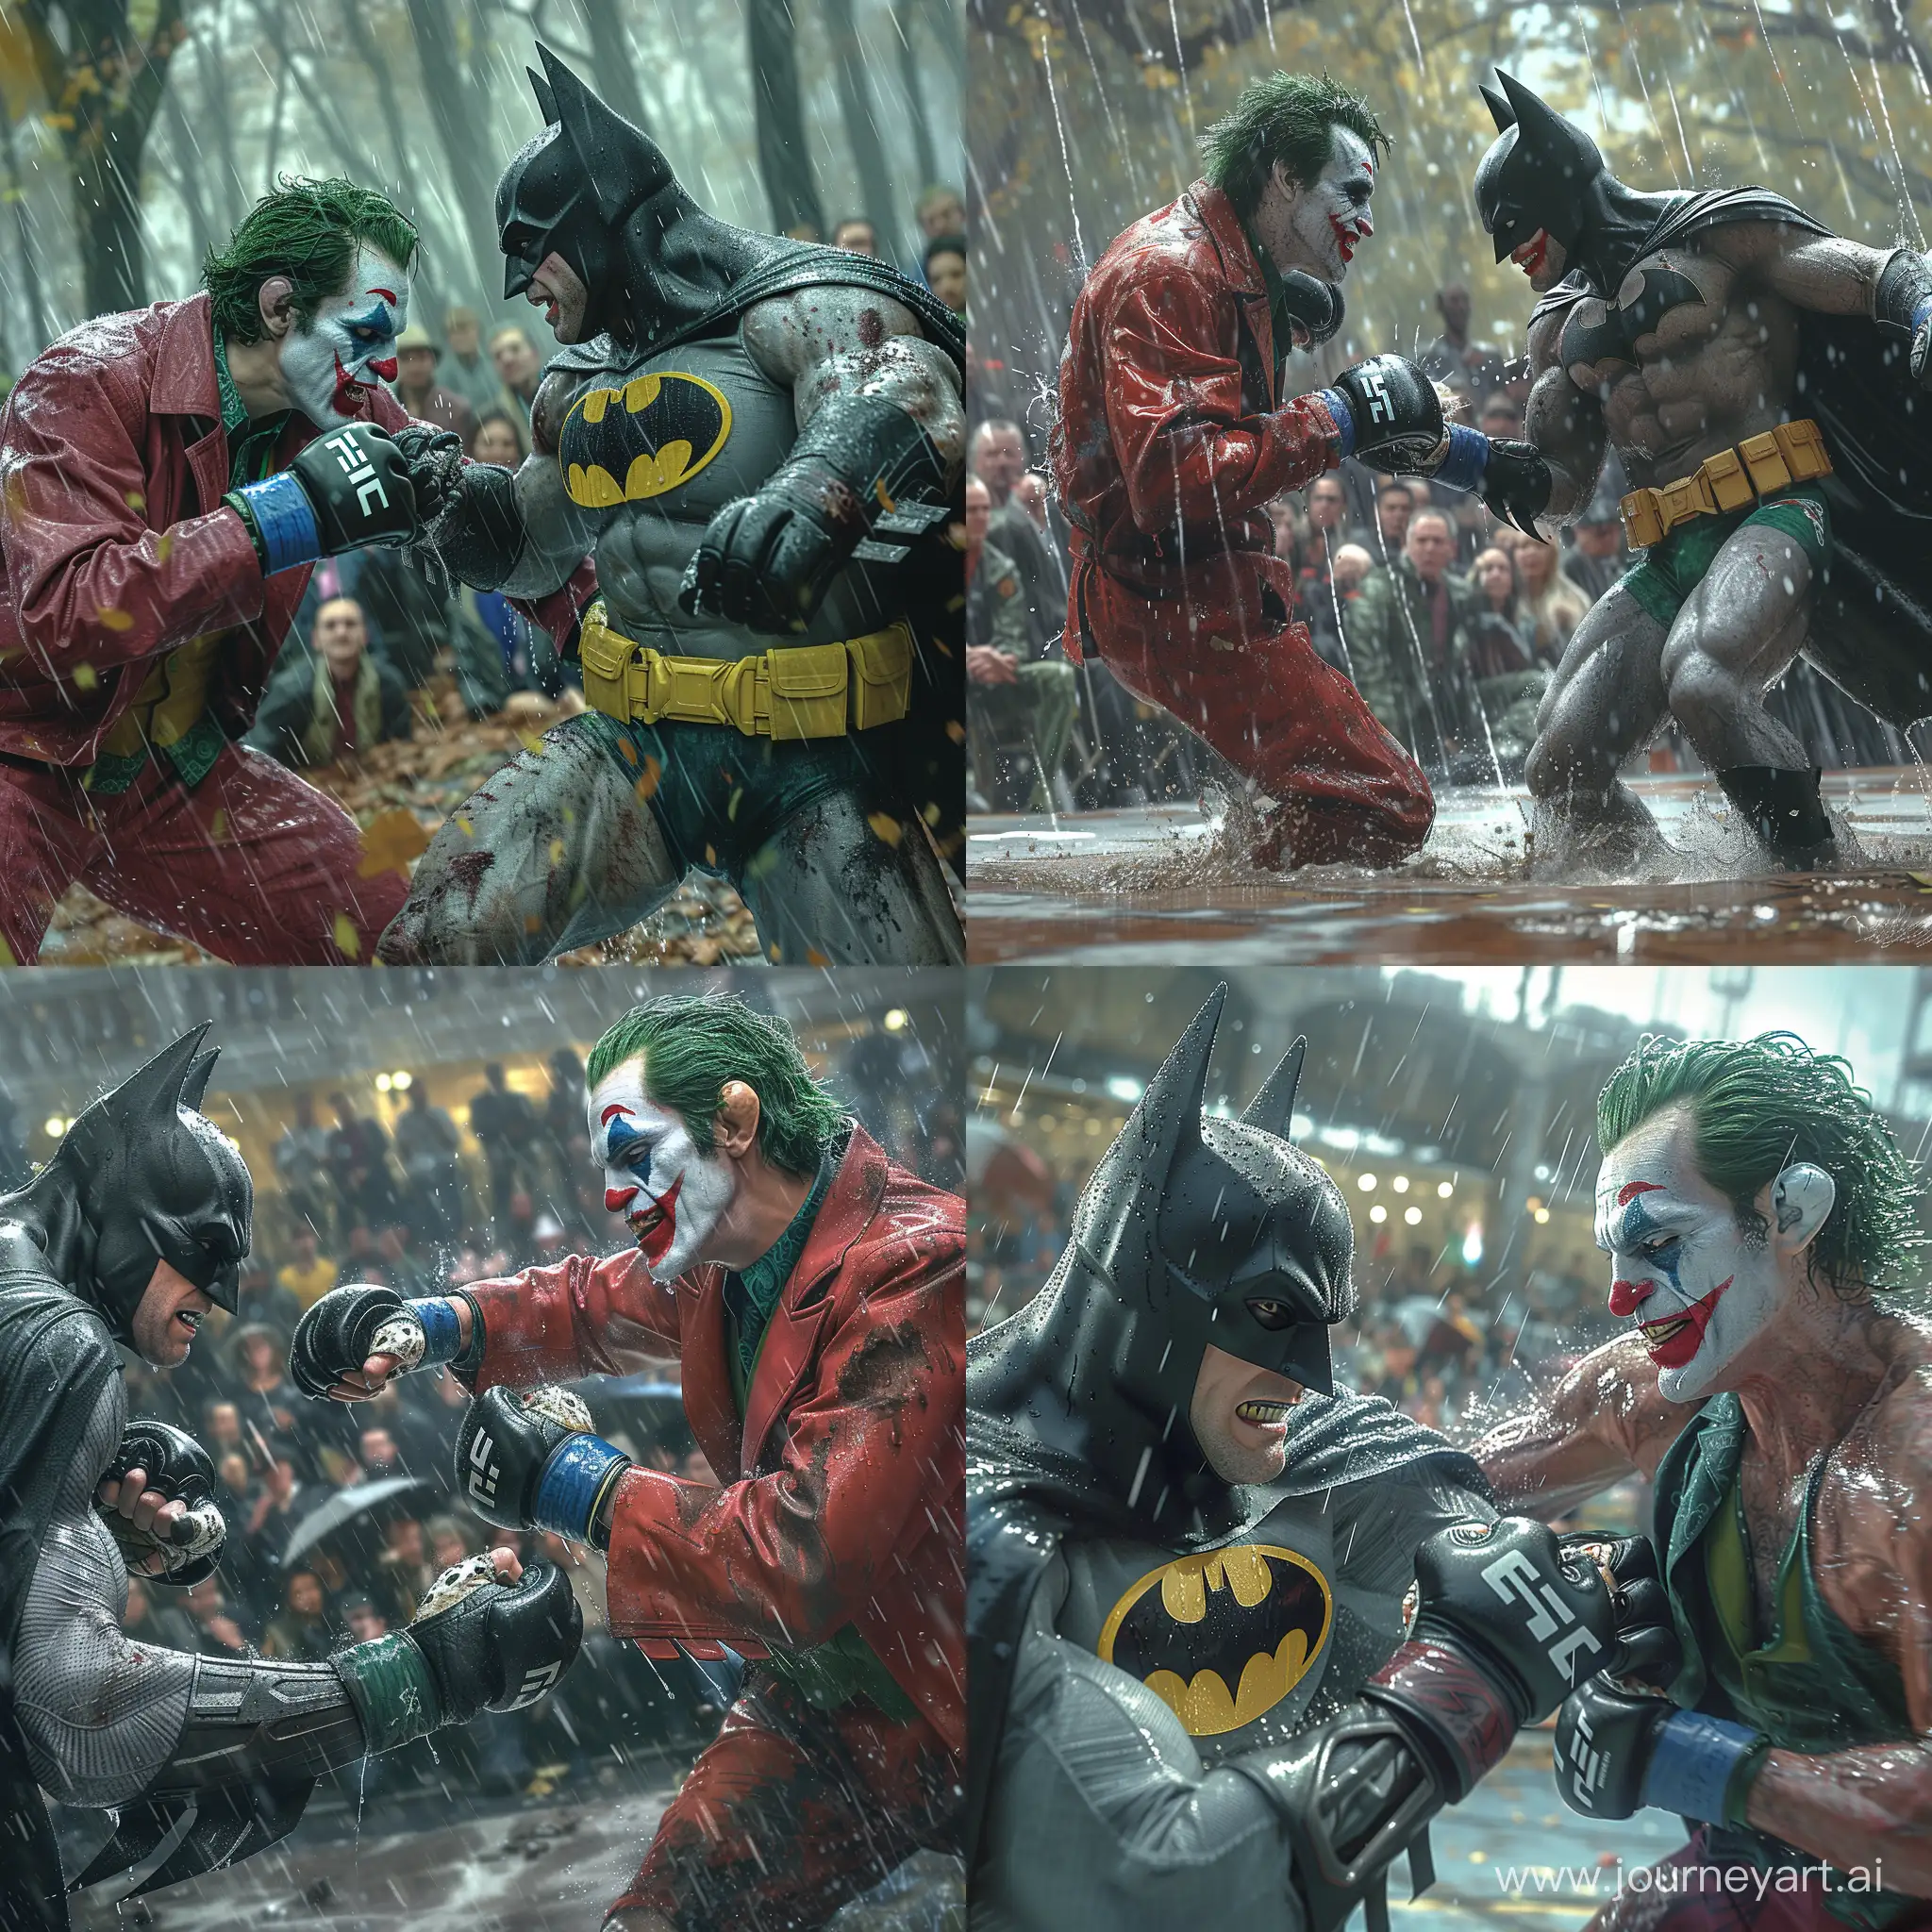 Batman-vs-Joker-MMA-Fight-in-Rainy-Arena-with-Audience